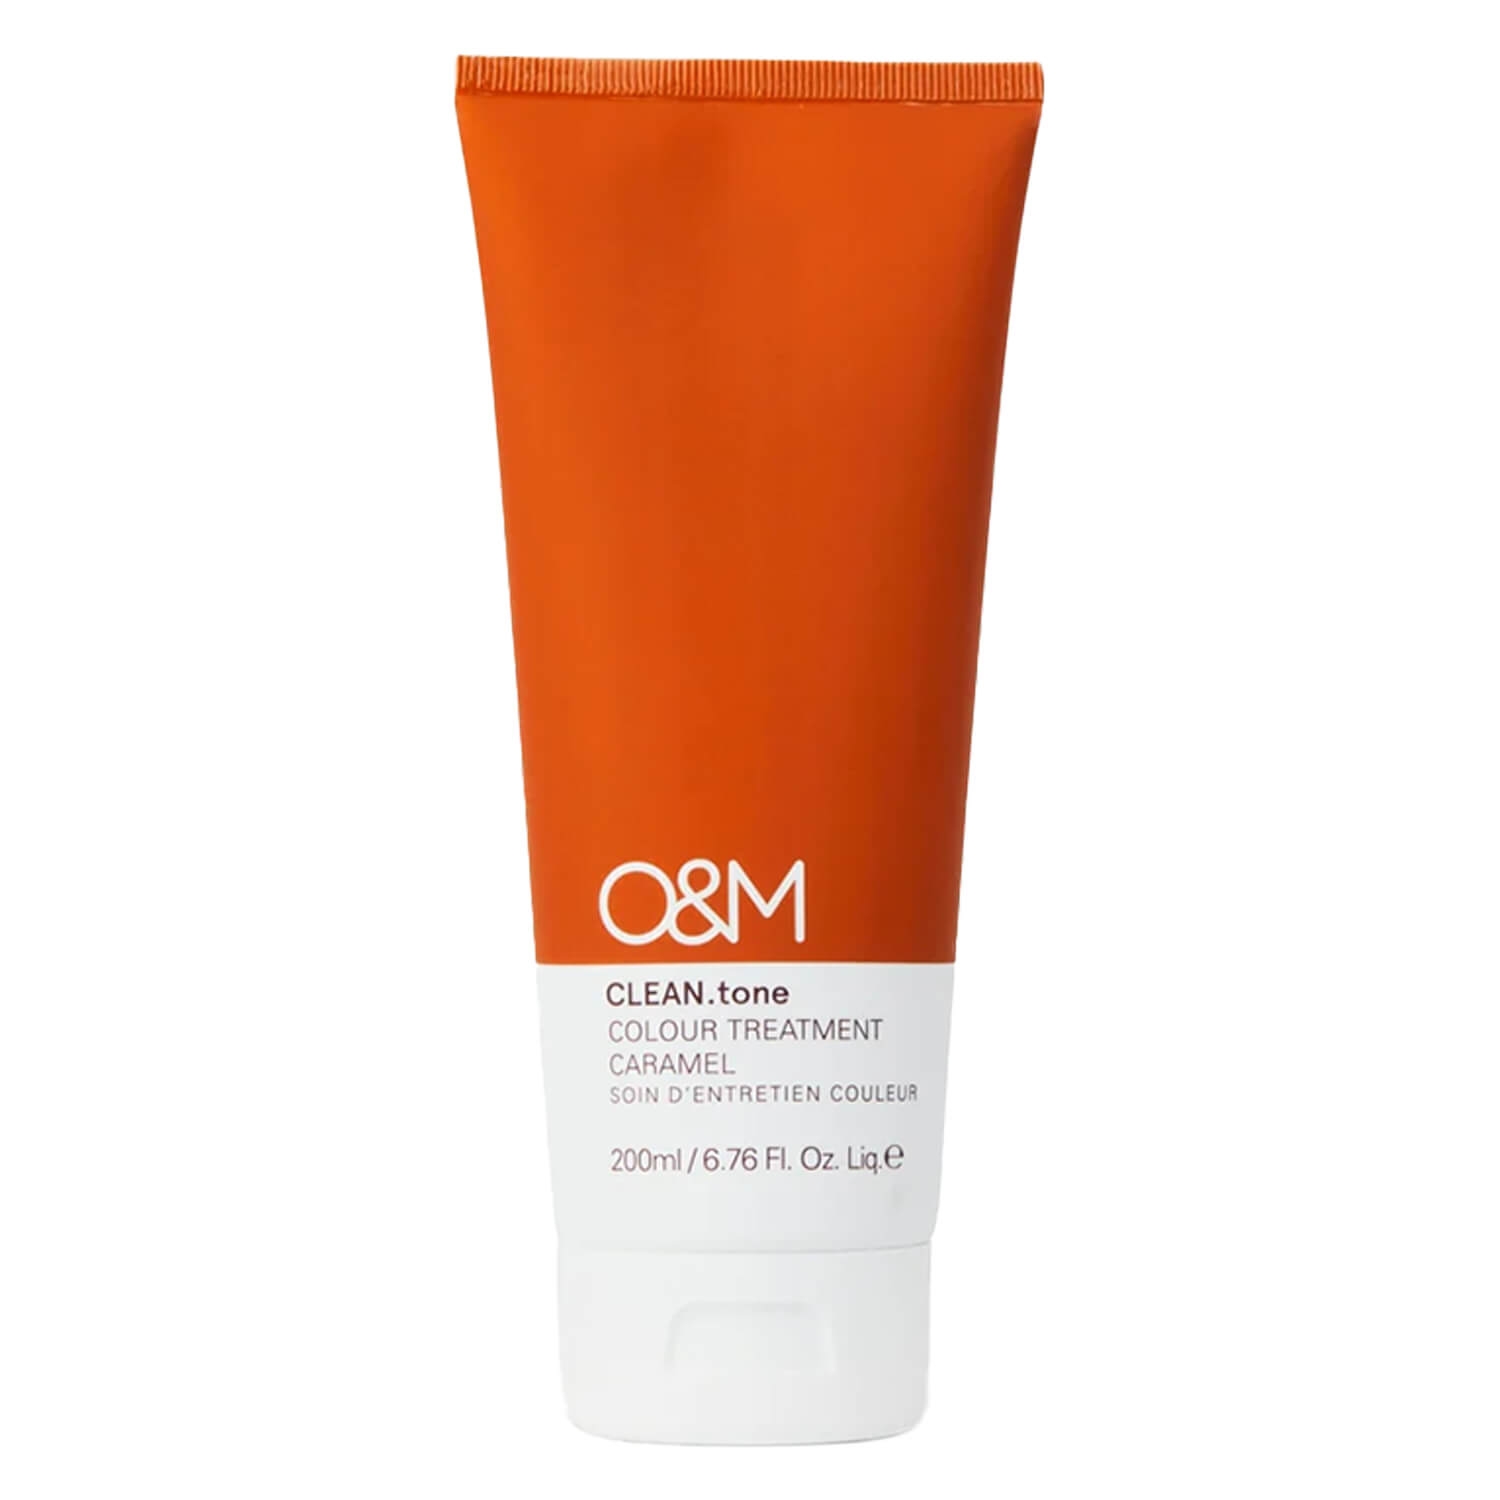 Produktbild von O&M Haircare - CLEAN.tone Color Treatment Caramel